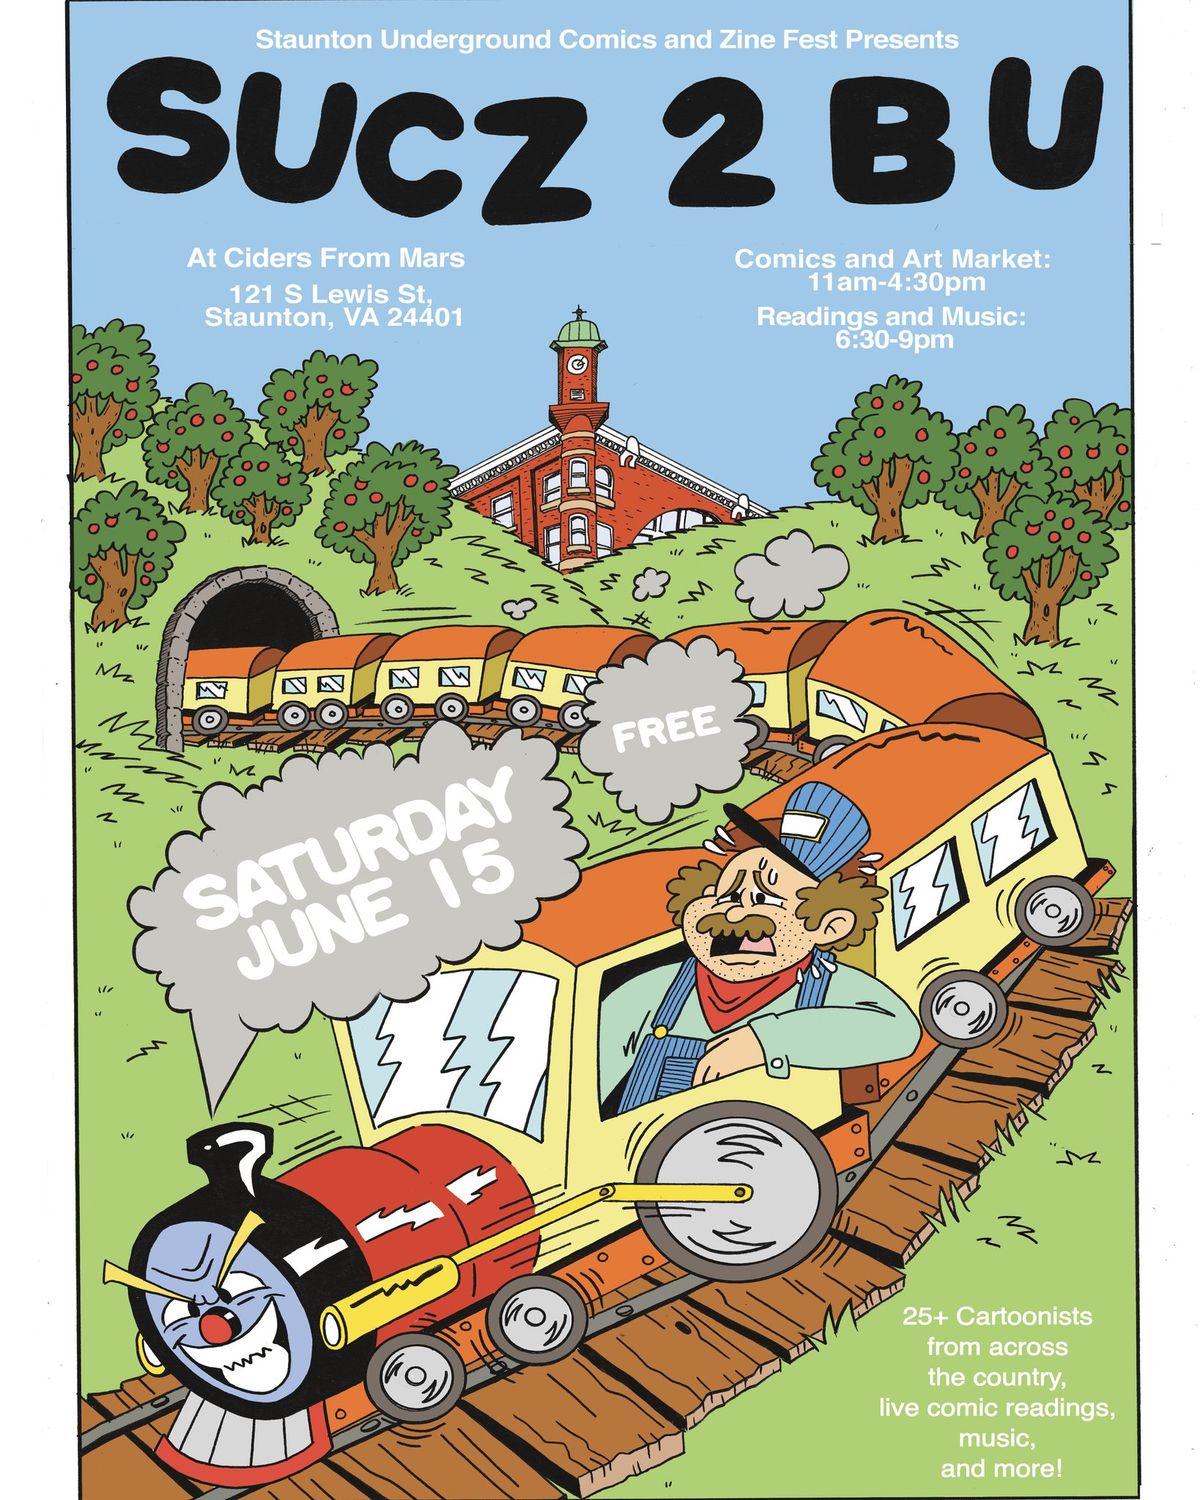 Staunton Underground Comics and Zine Fest 2: SUCZ 2 B U